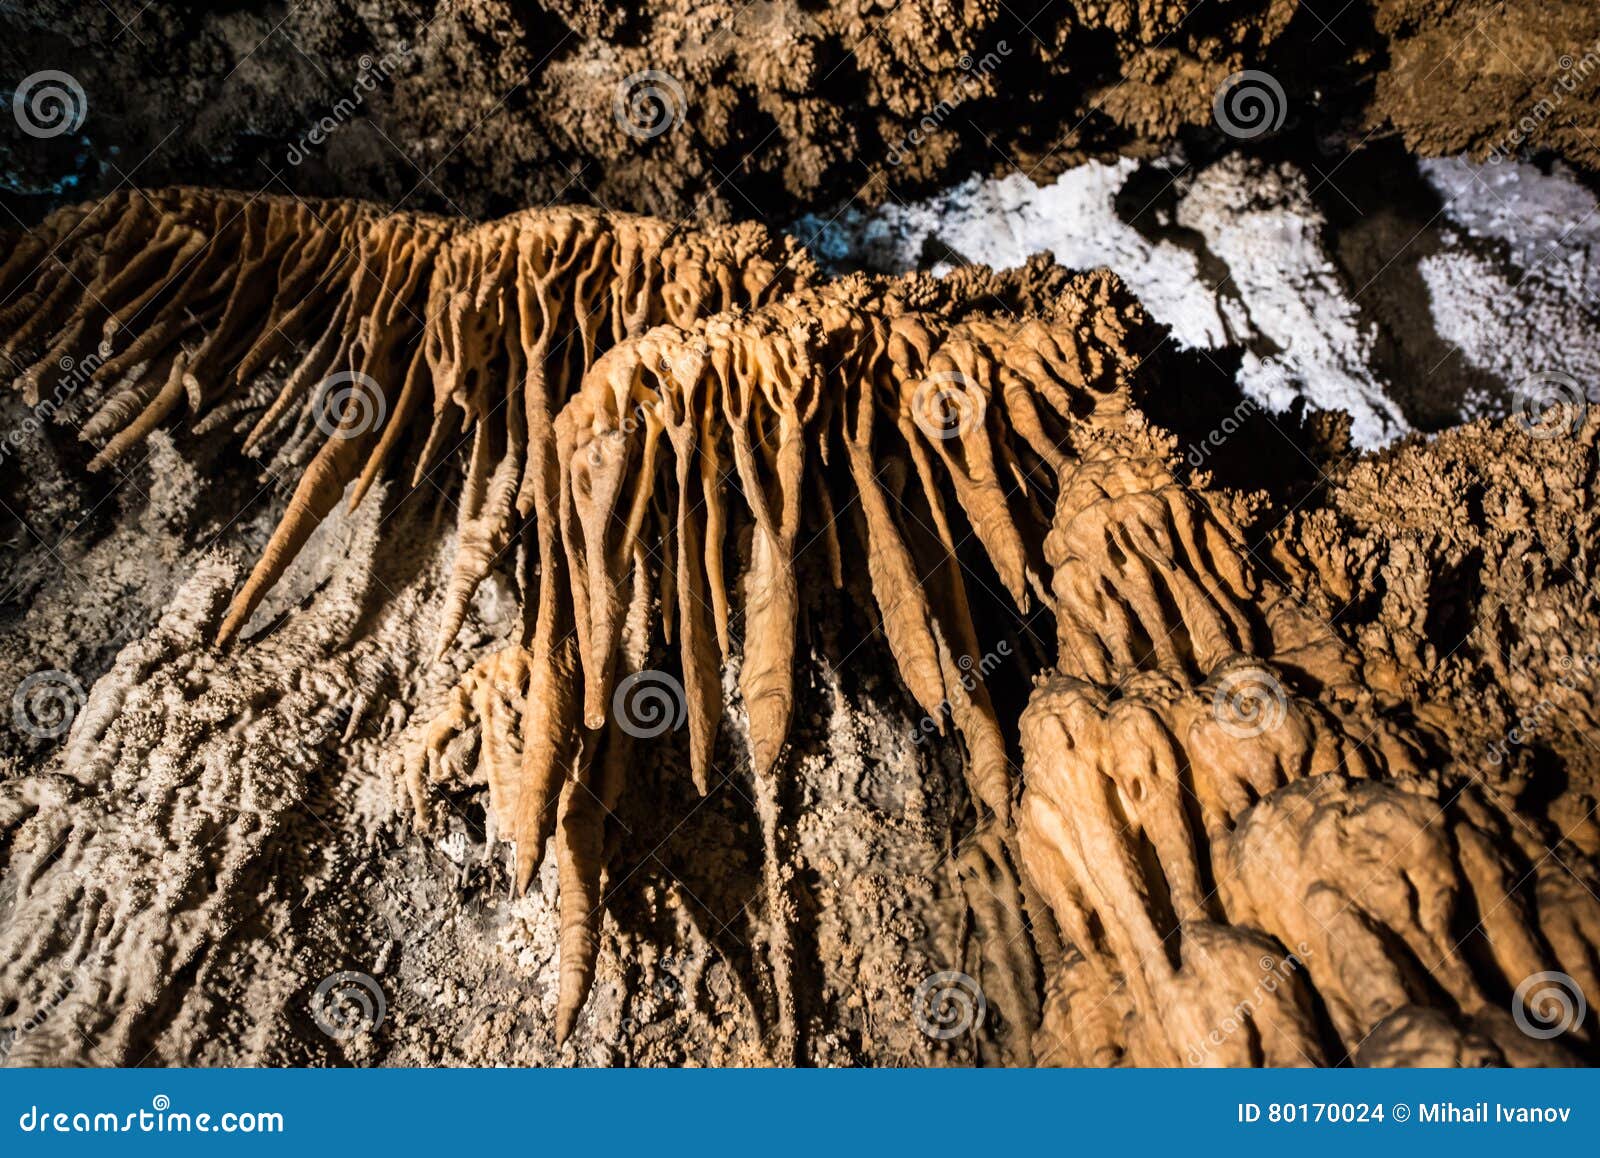 uhlovitsa: stalactites